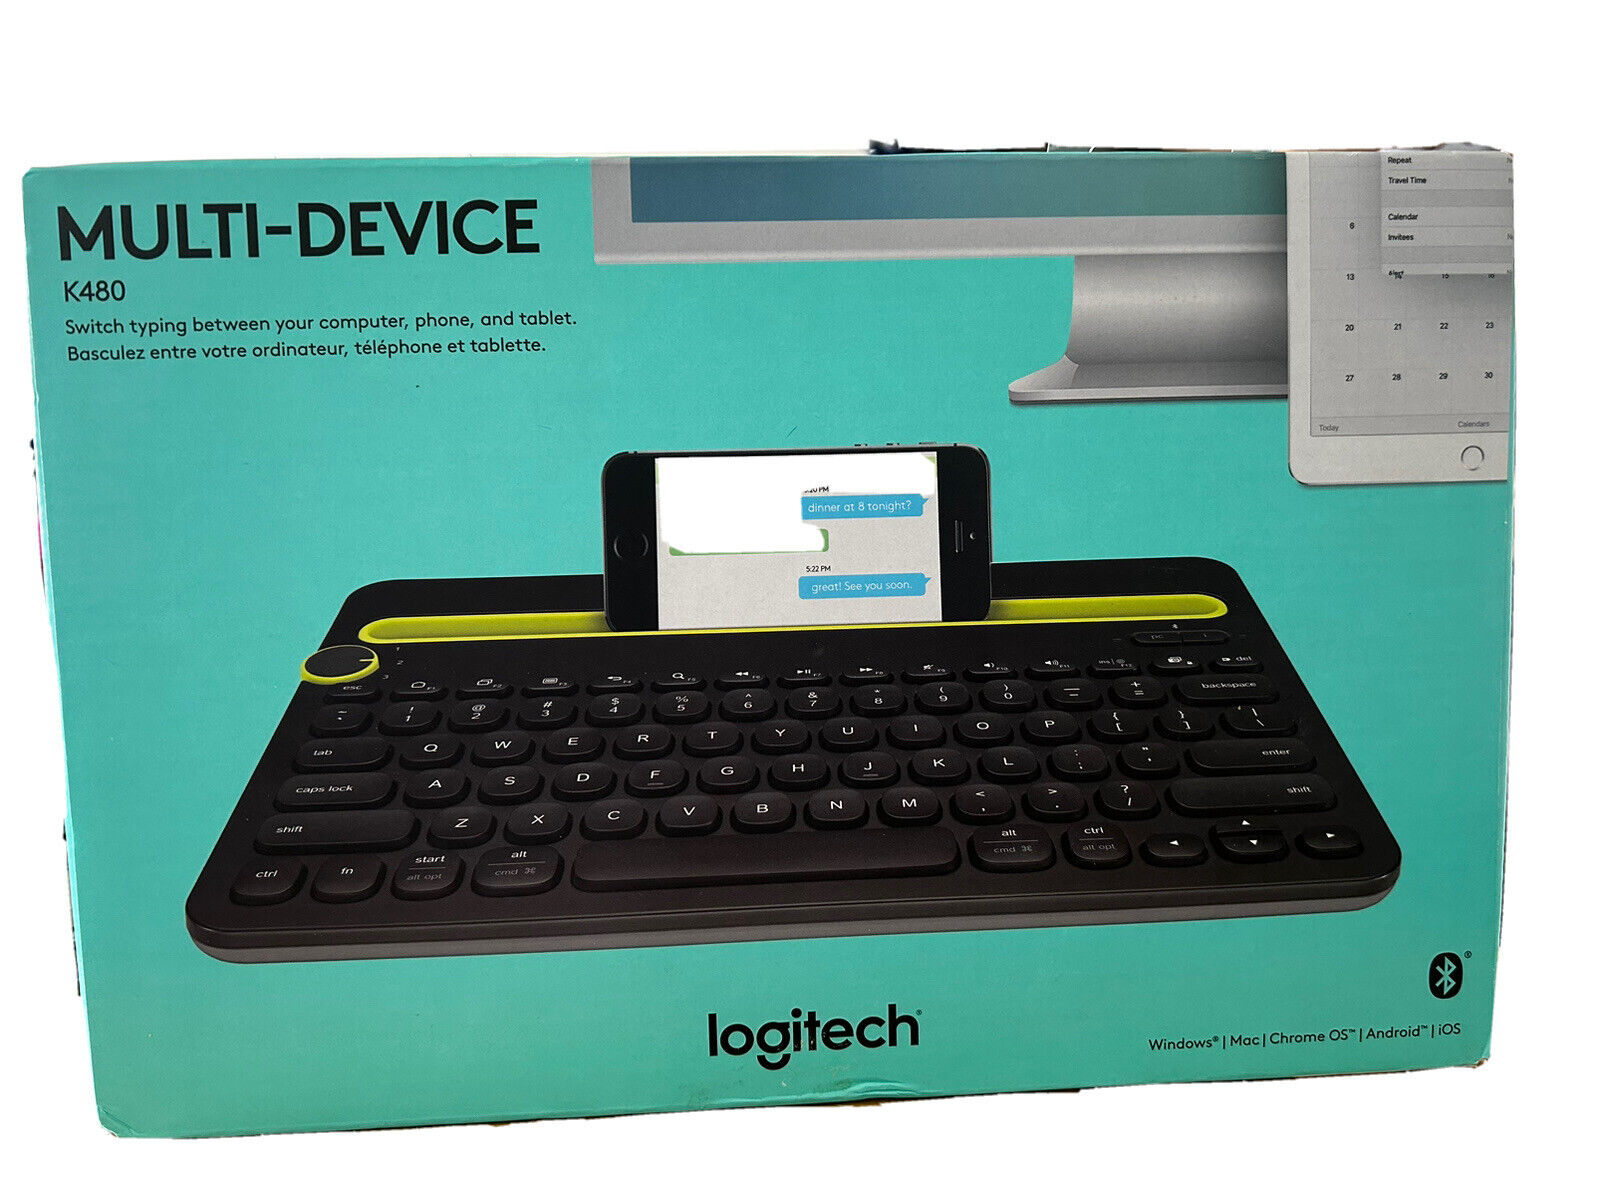 Multi-Device Keyboard, Logitech K480 Brand New, FACTORY SEALED